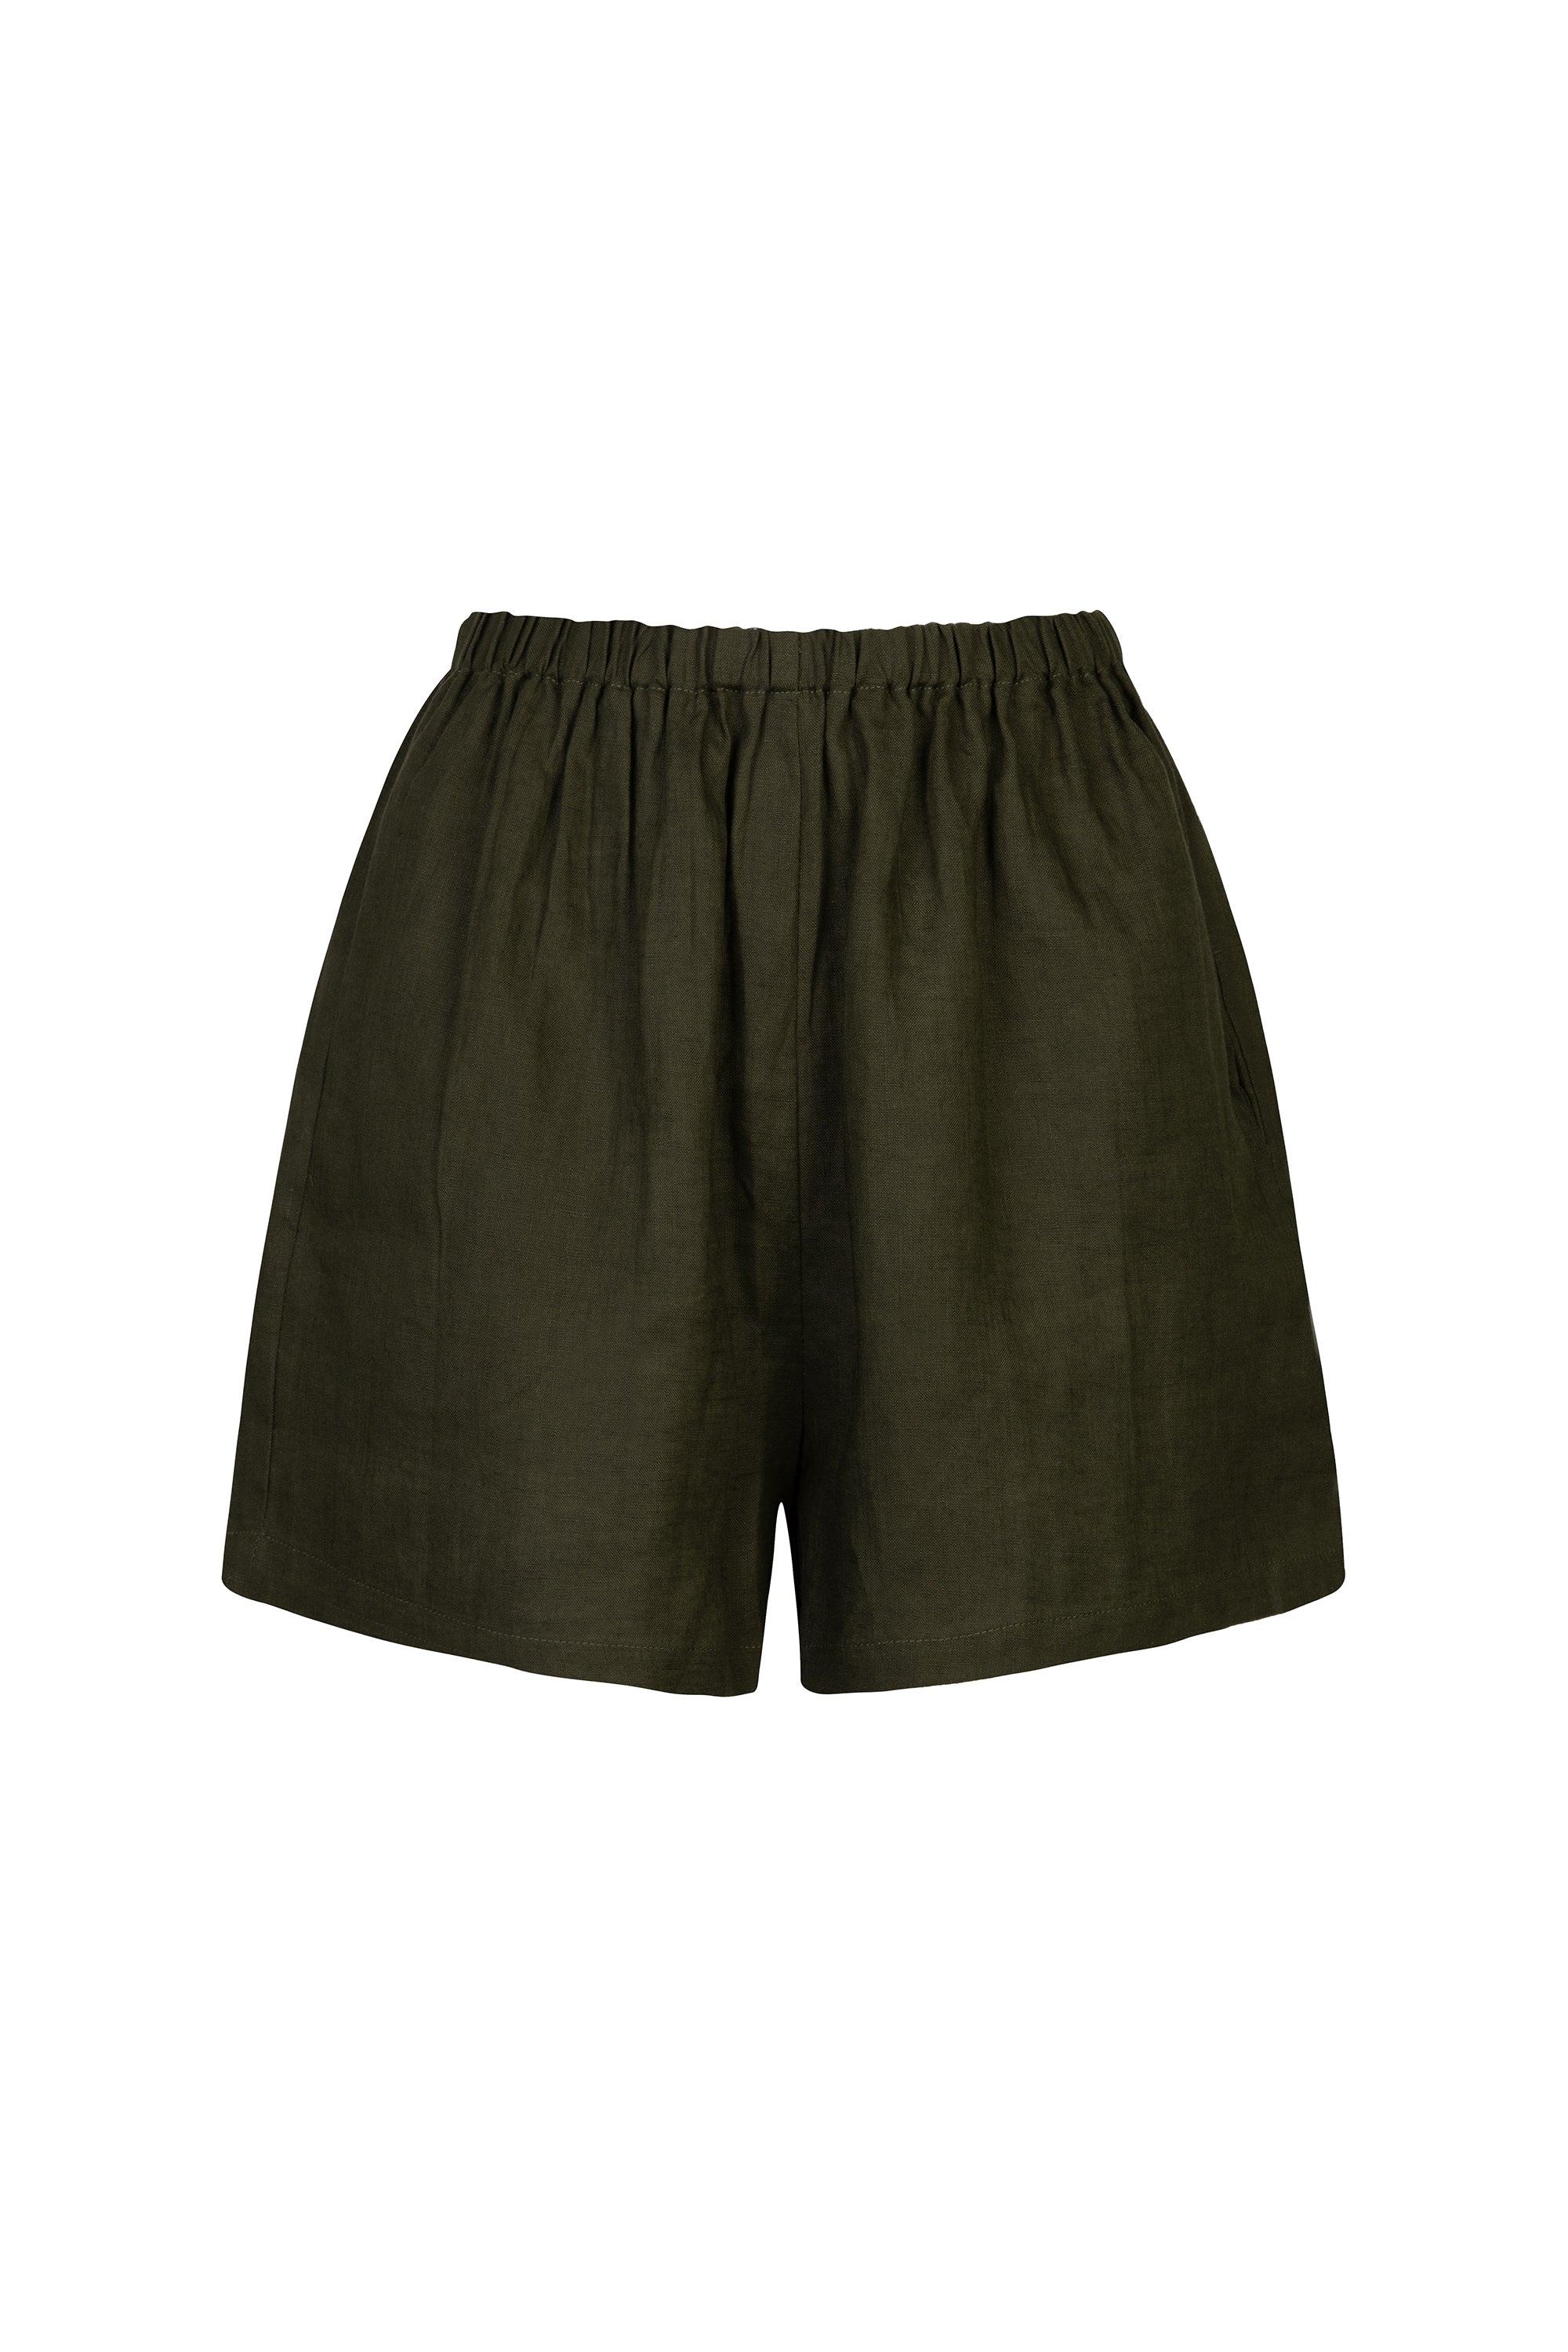 olive linen shorts